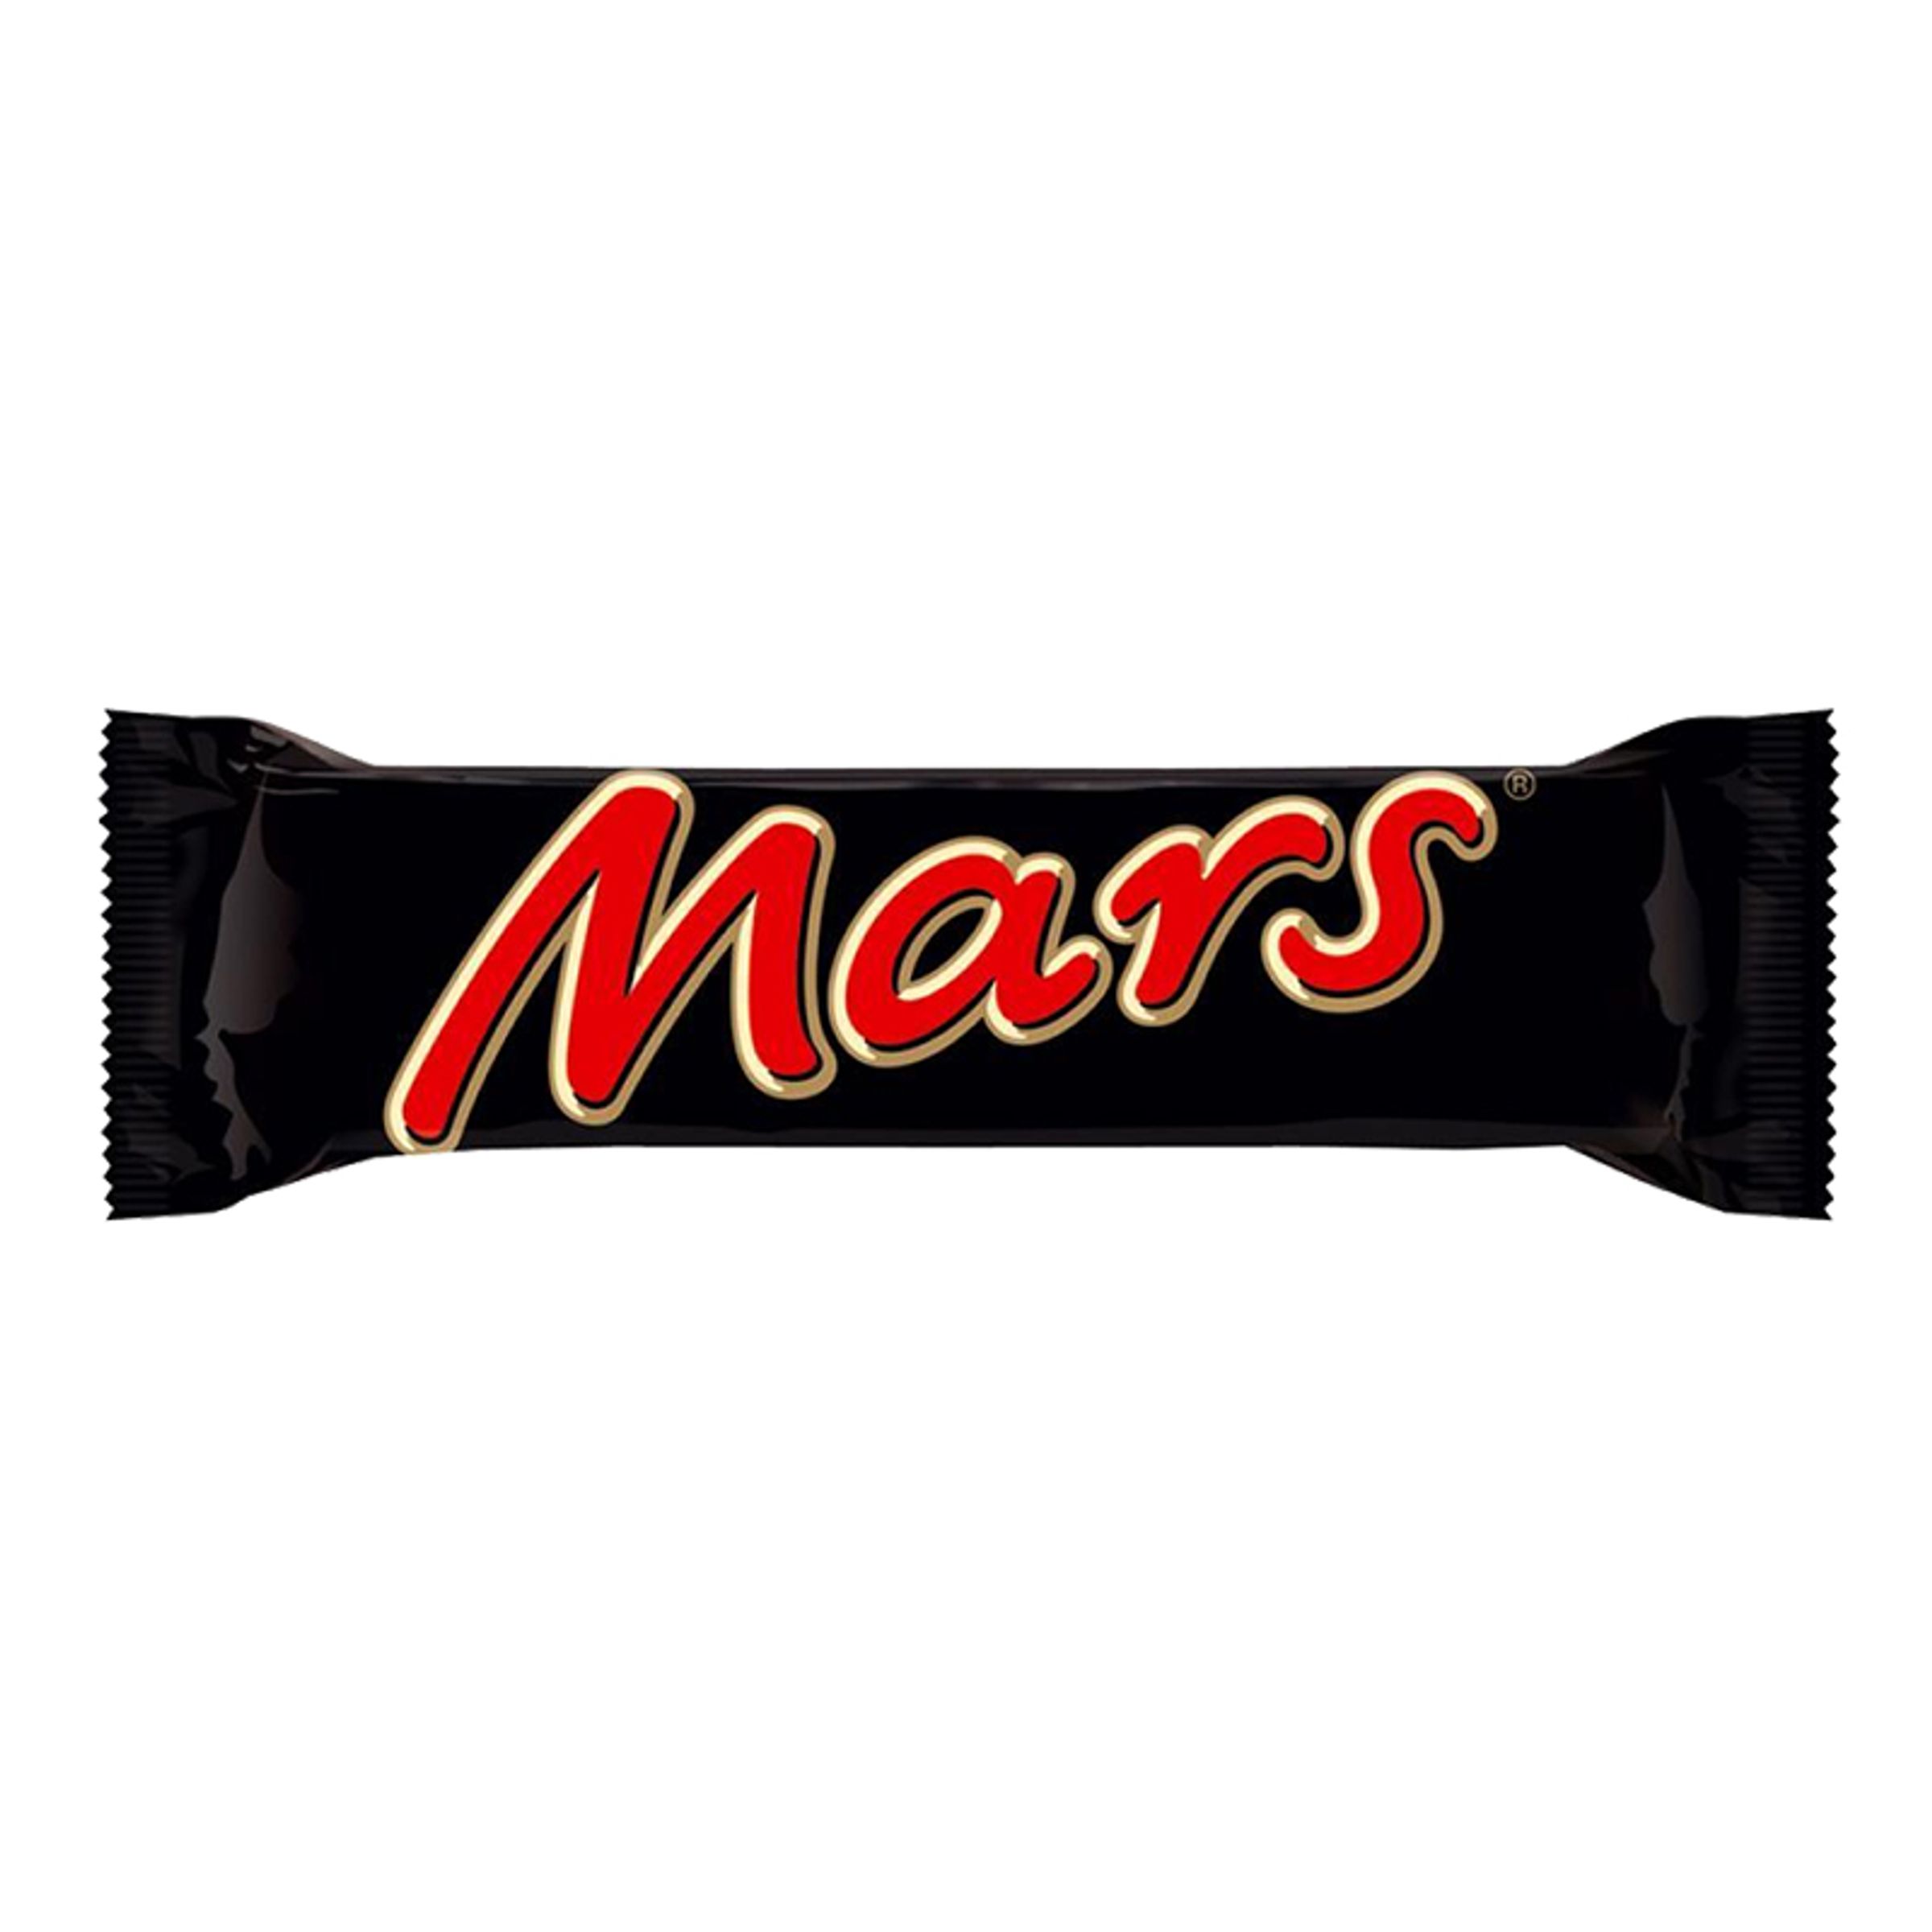 Mars Chokladbit - 51 gram